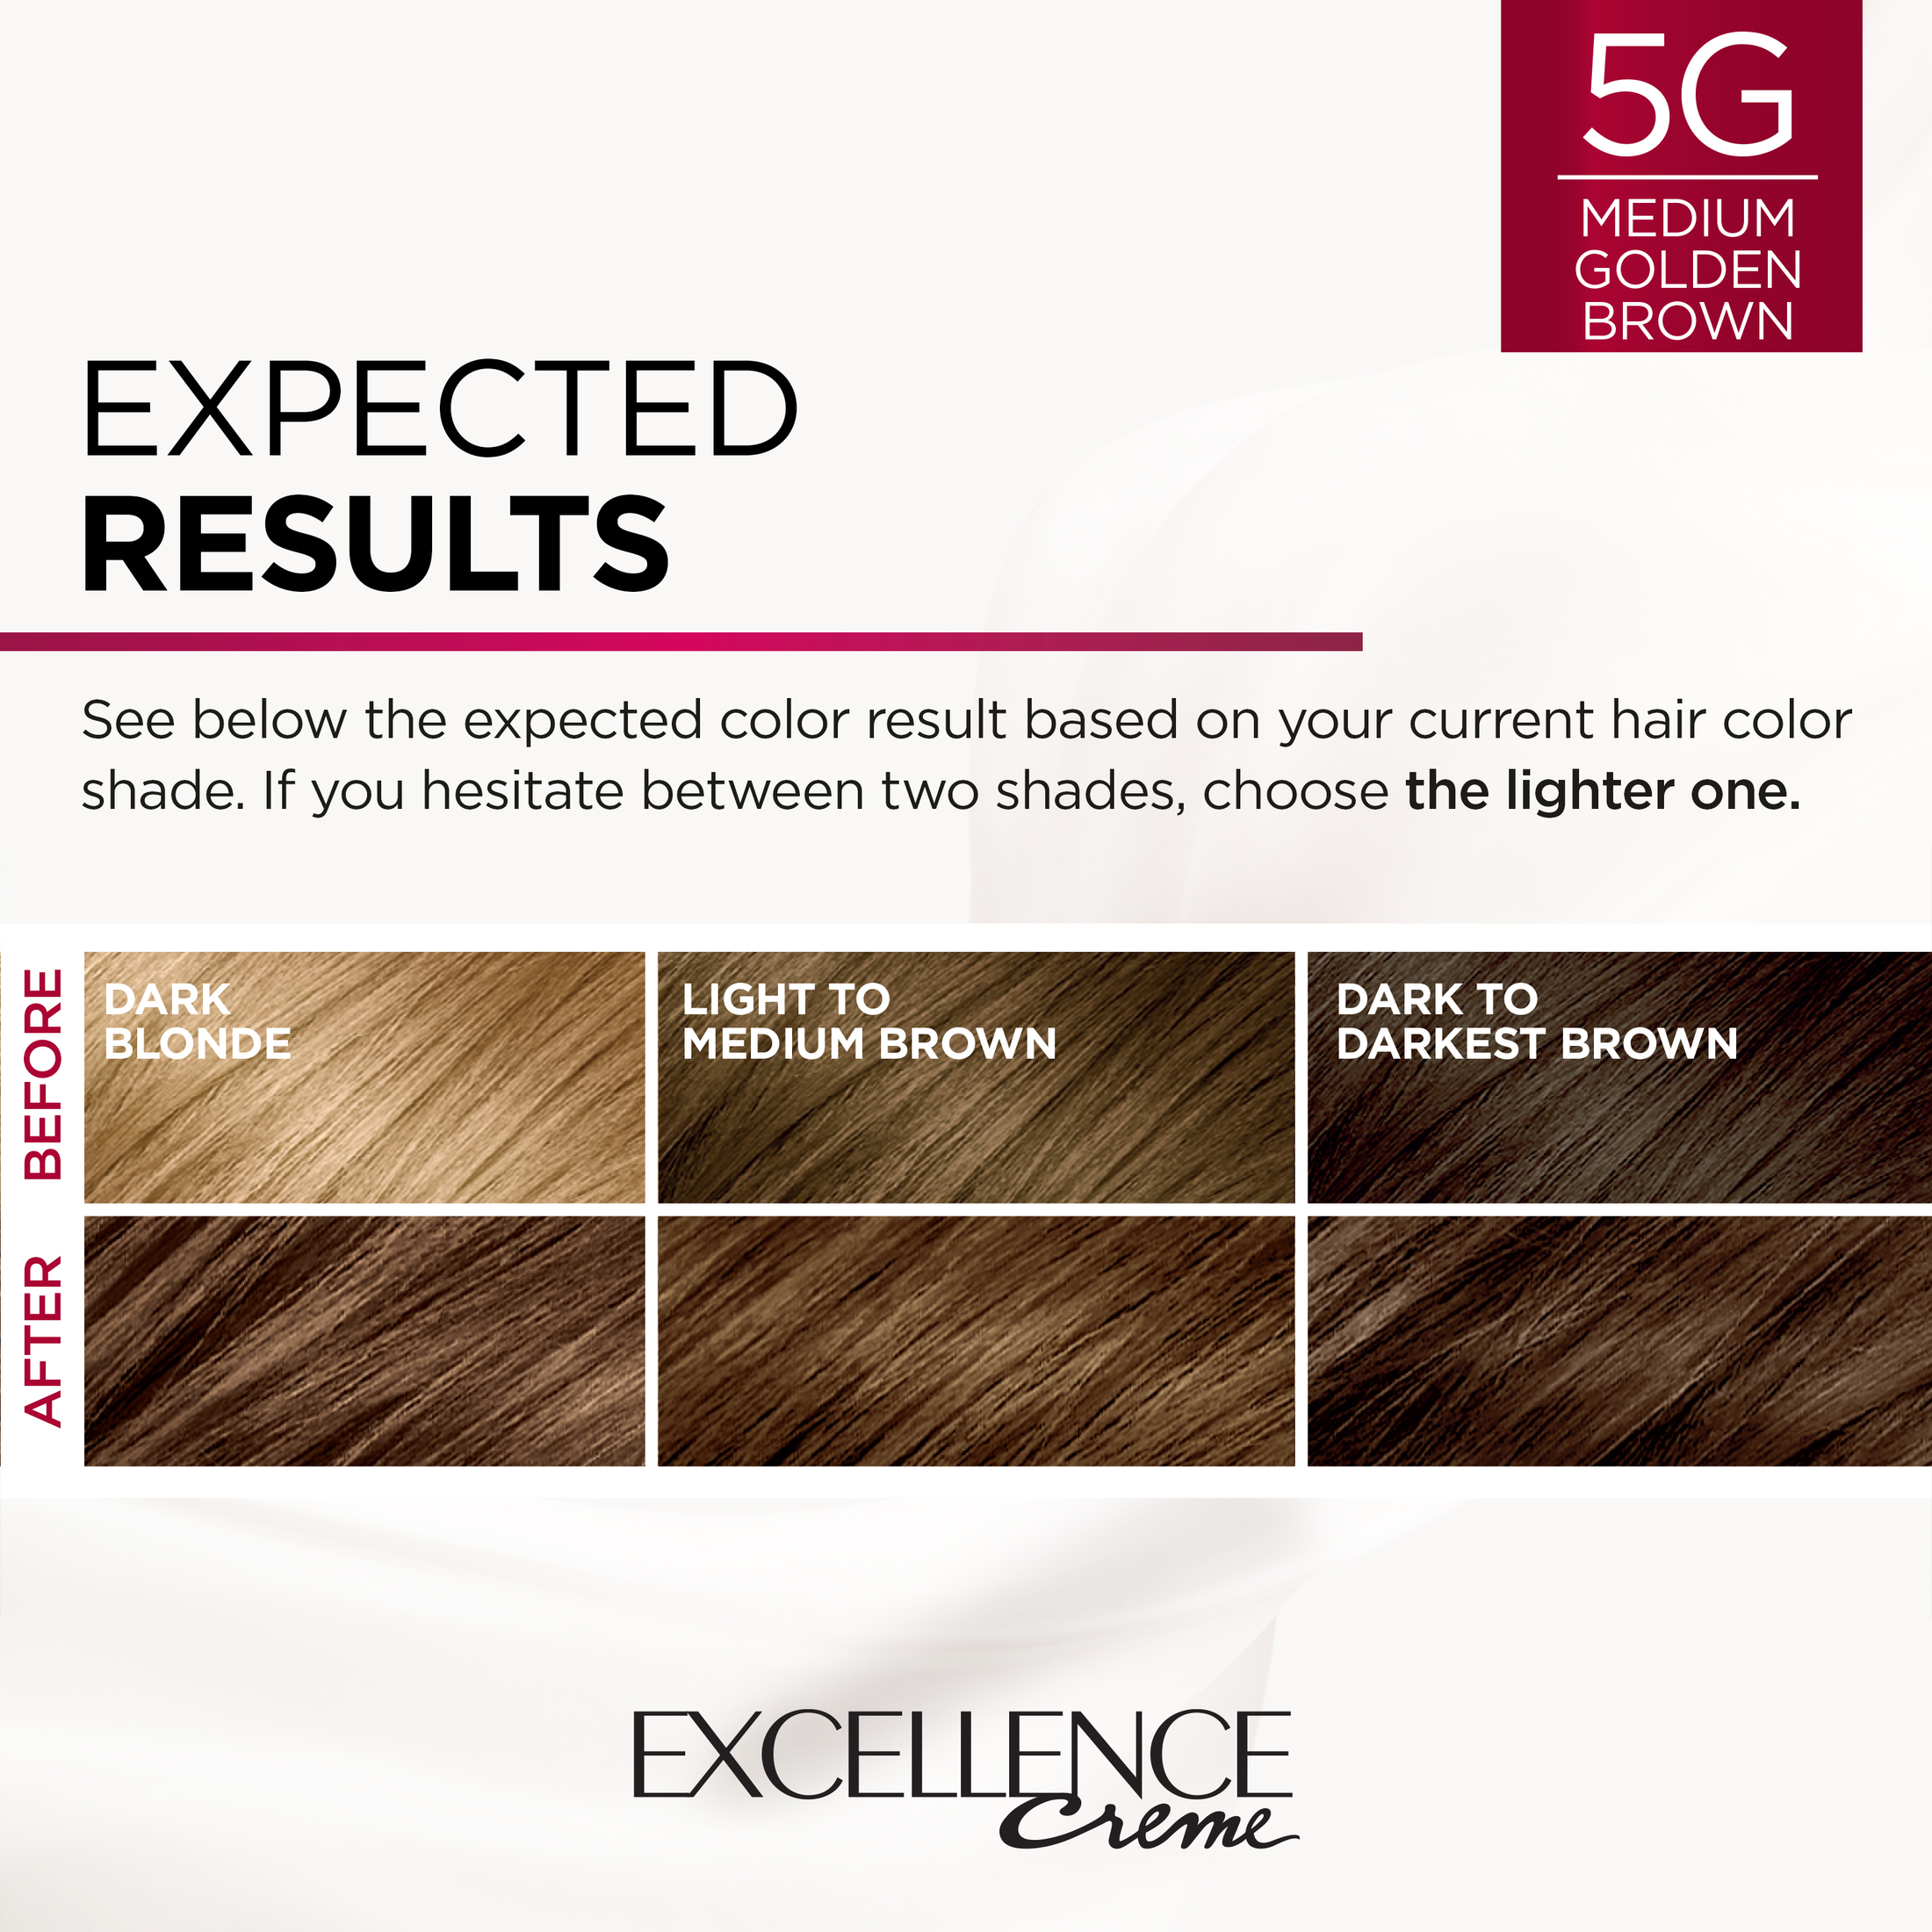 L'Oreal Paris Excellence Creme Permanent Hair Color, 5G Medium Golden Brown - image 5 of 9